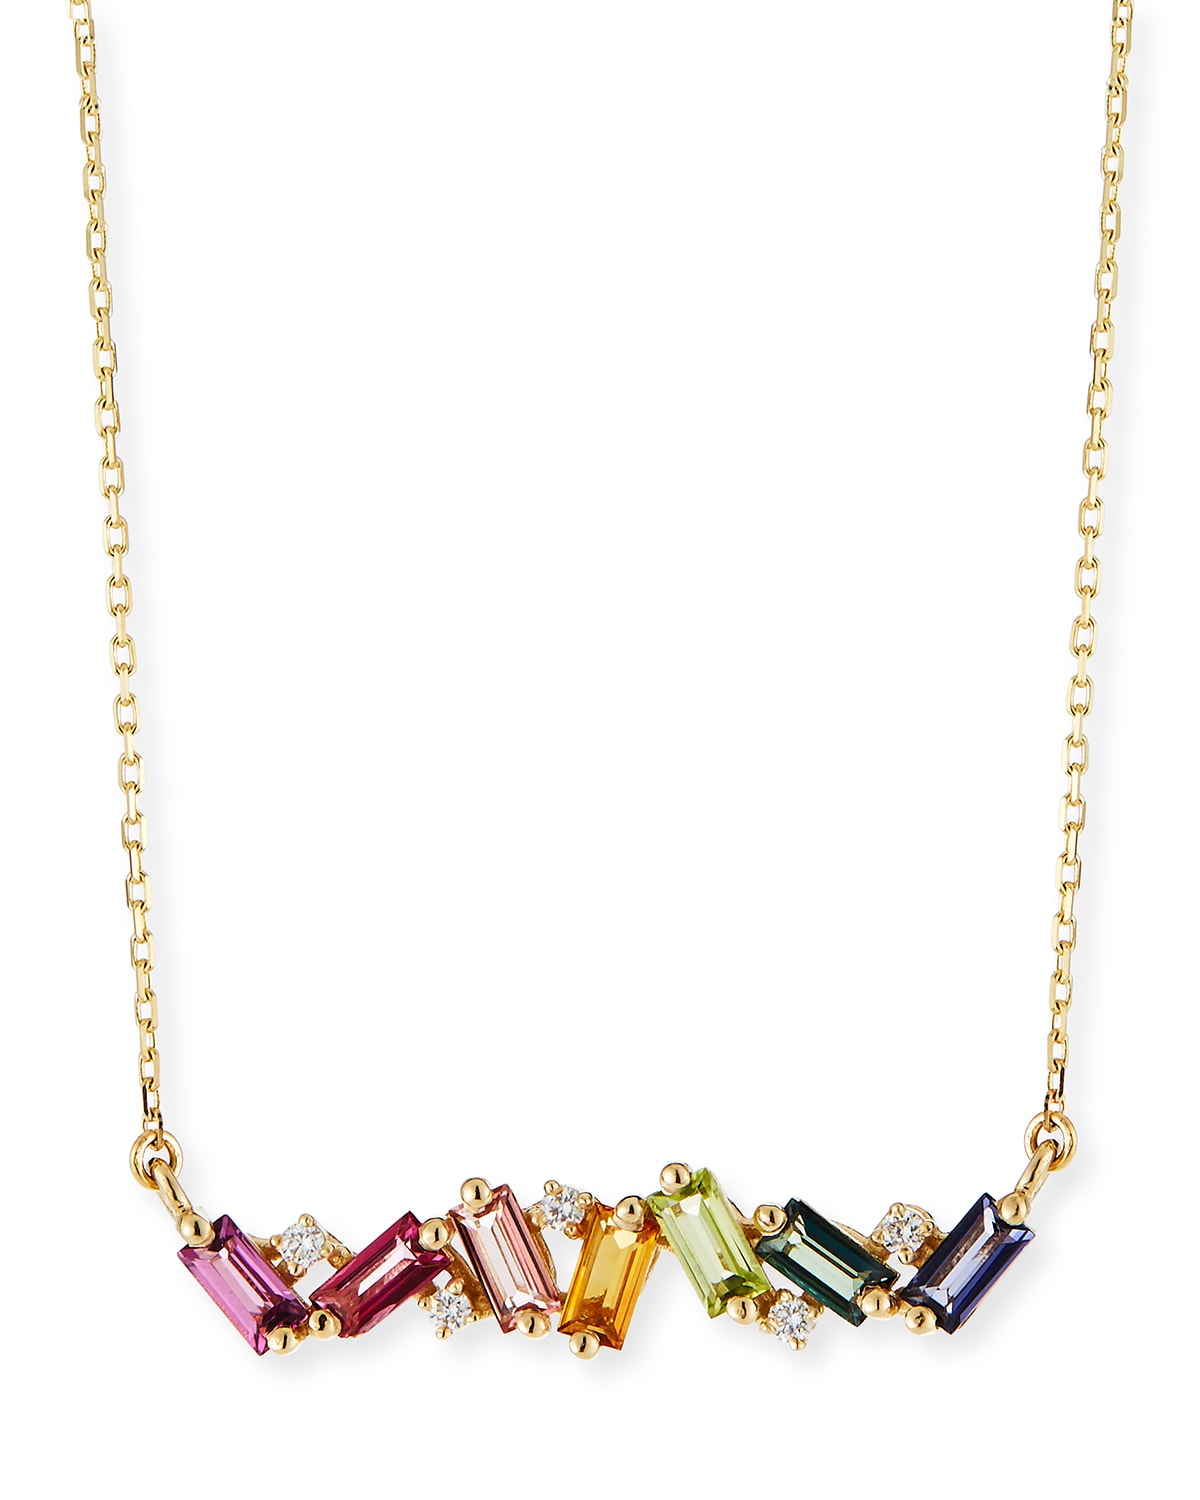 KALAN by Suzanne Kalan 14K Yellow Gold Rainbow Zigzag Bar Necklace with Diamonds